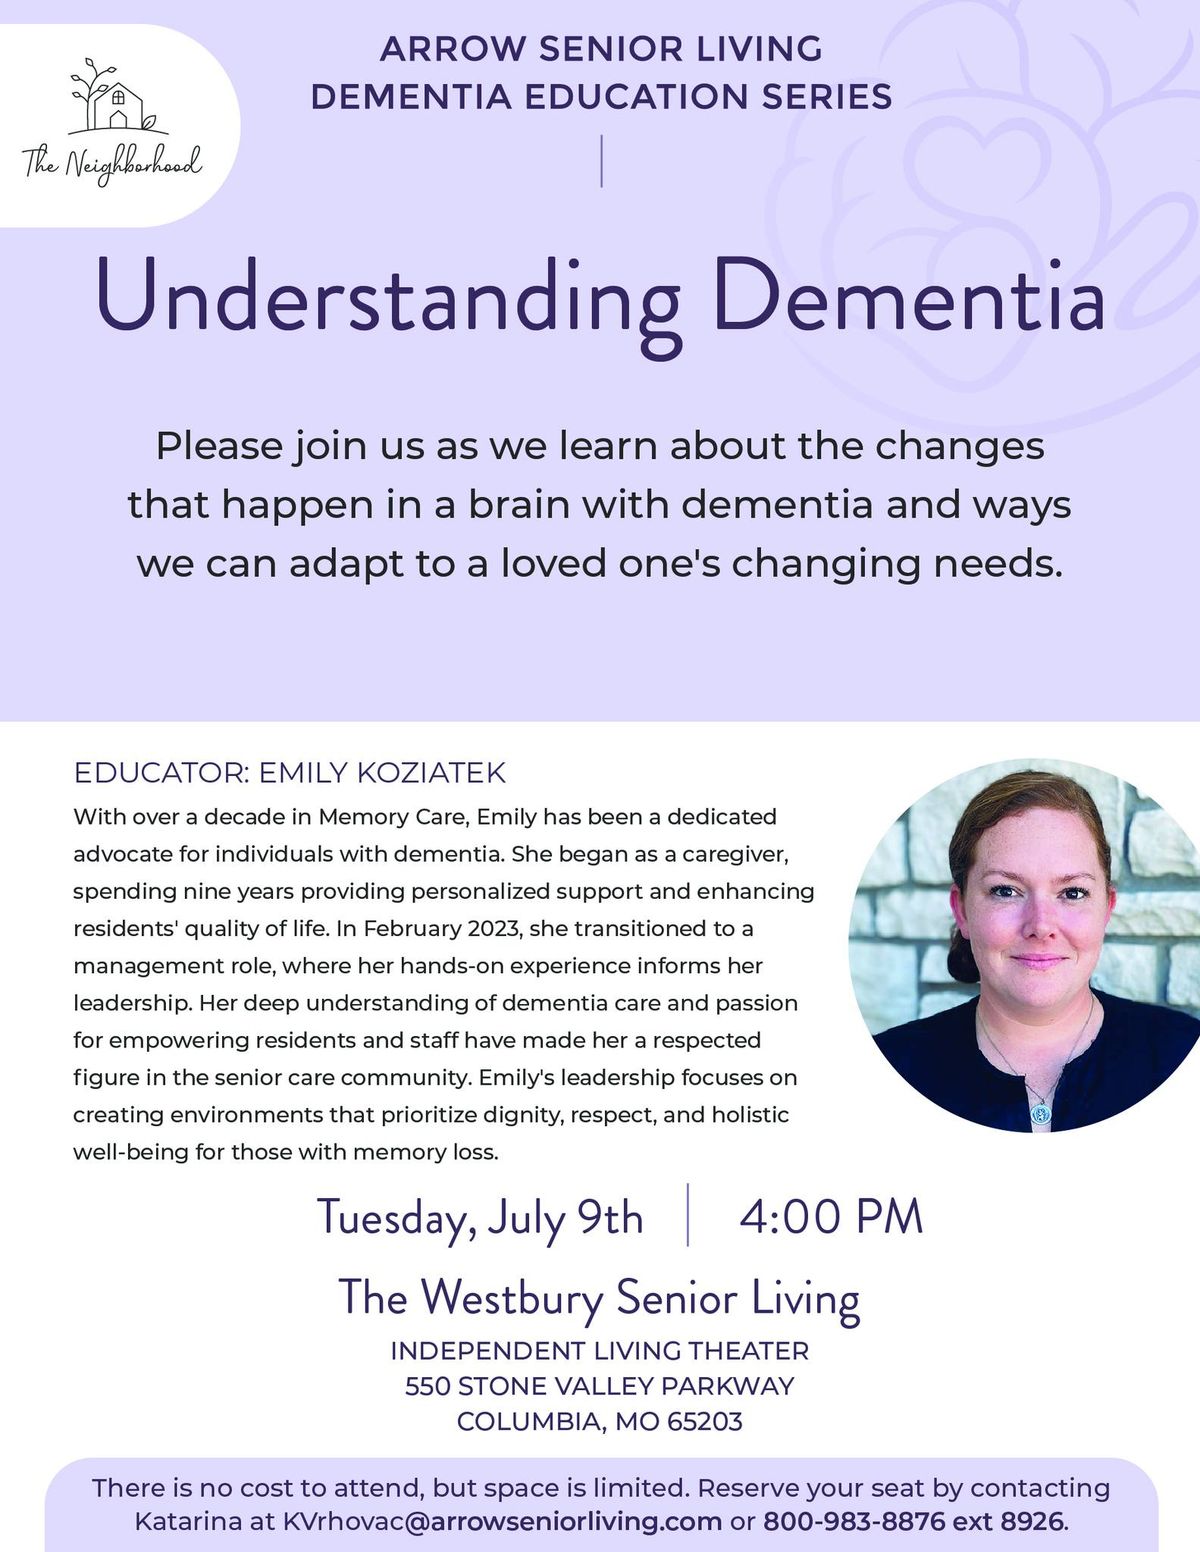 Education Series: Understanding Dementia 